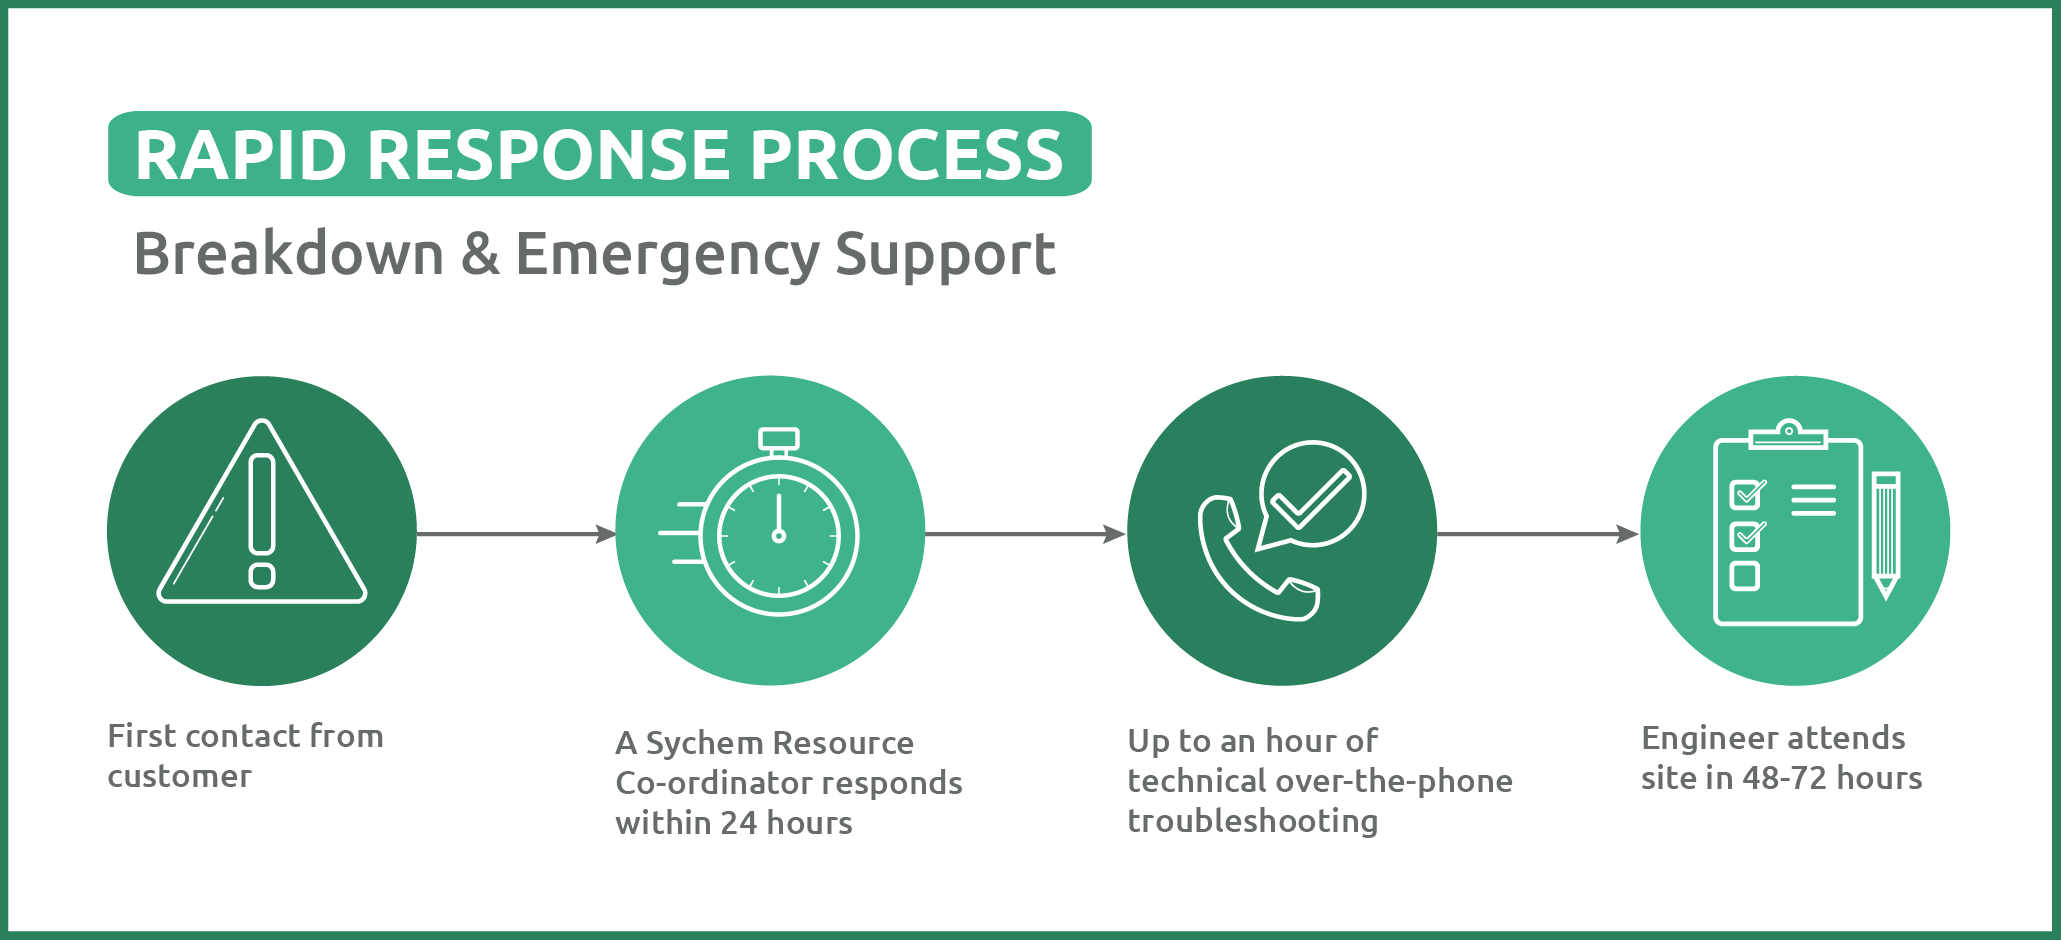 Breakdown support Breakdown and Emergency Support 